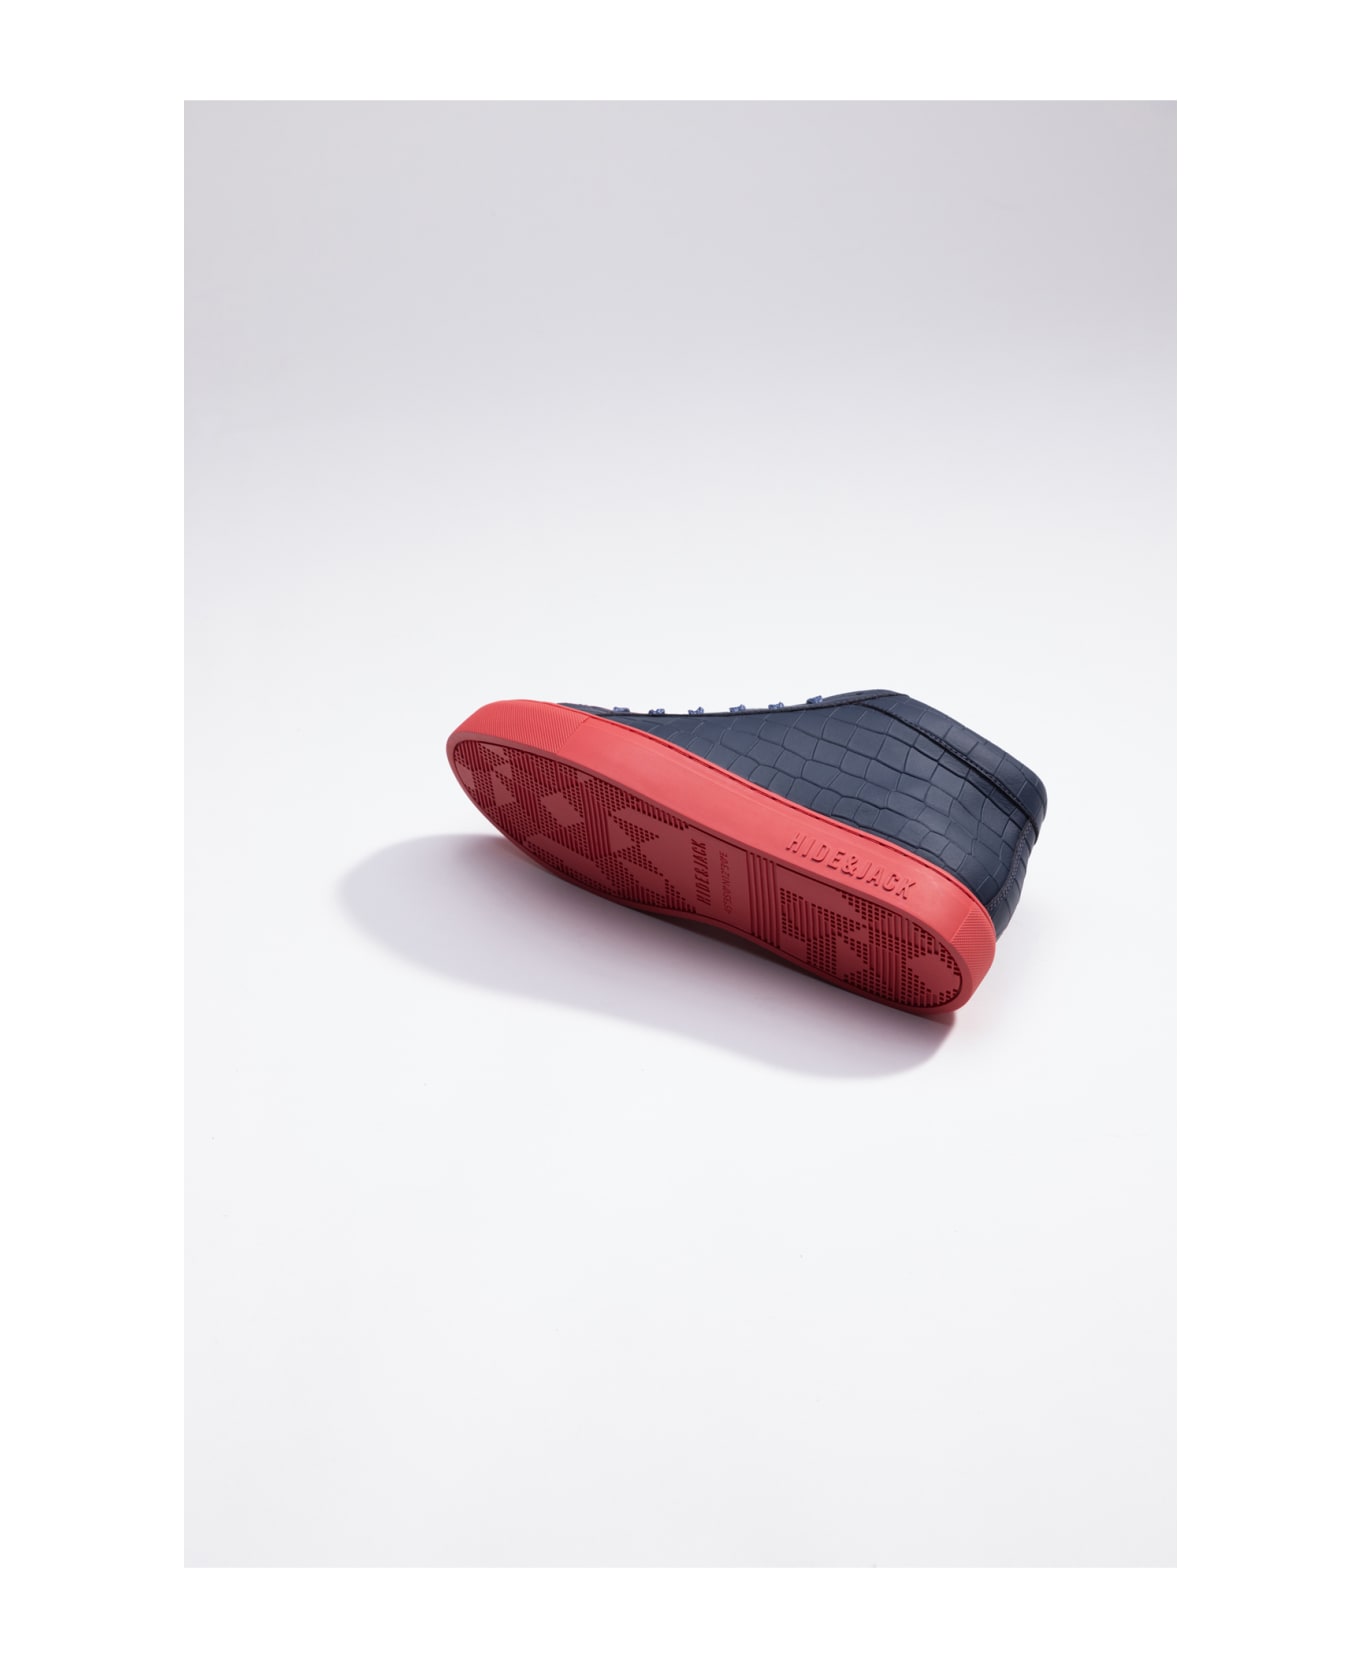 Hide&Jack High Top Sneaker - Essence Blue Red スニーカー